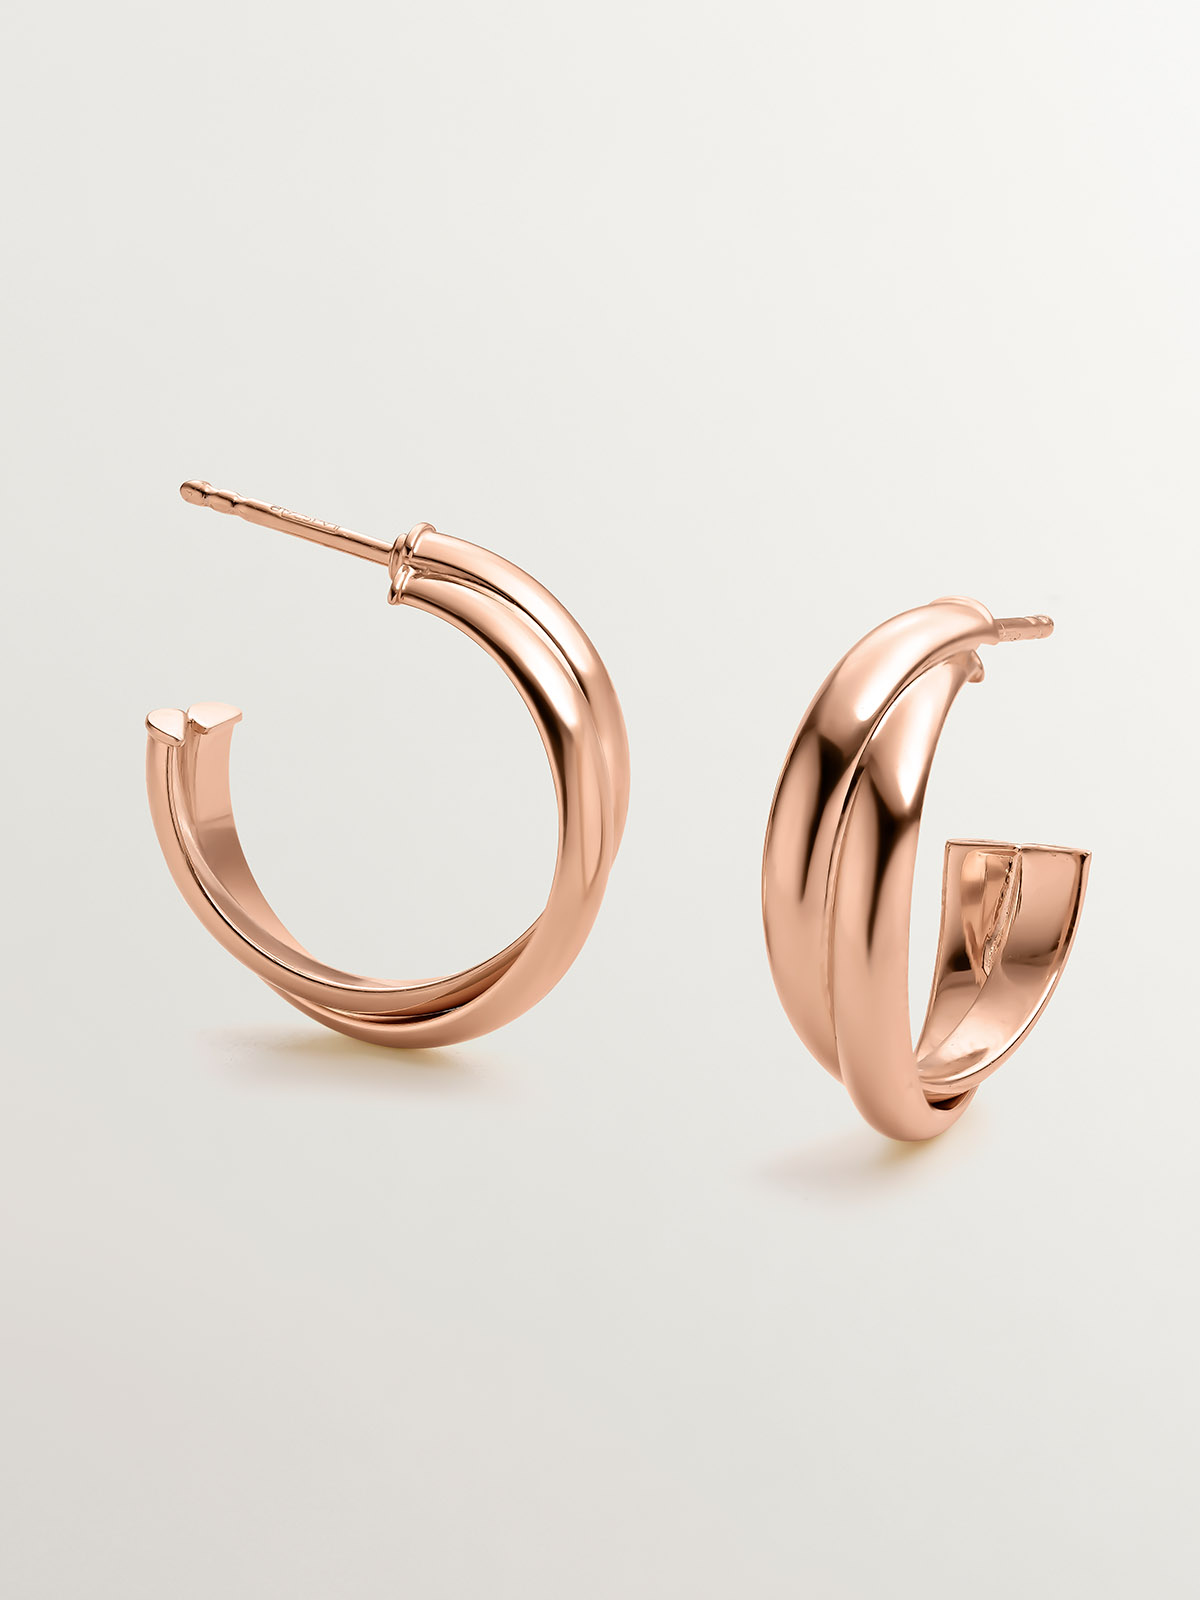 Medium double hoop earrings made of 925 silver, coated in 18K rose gold.